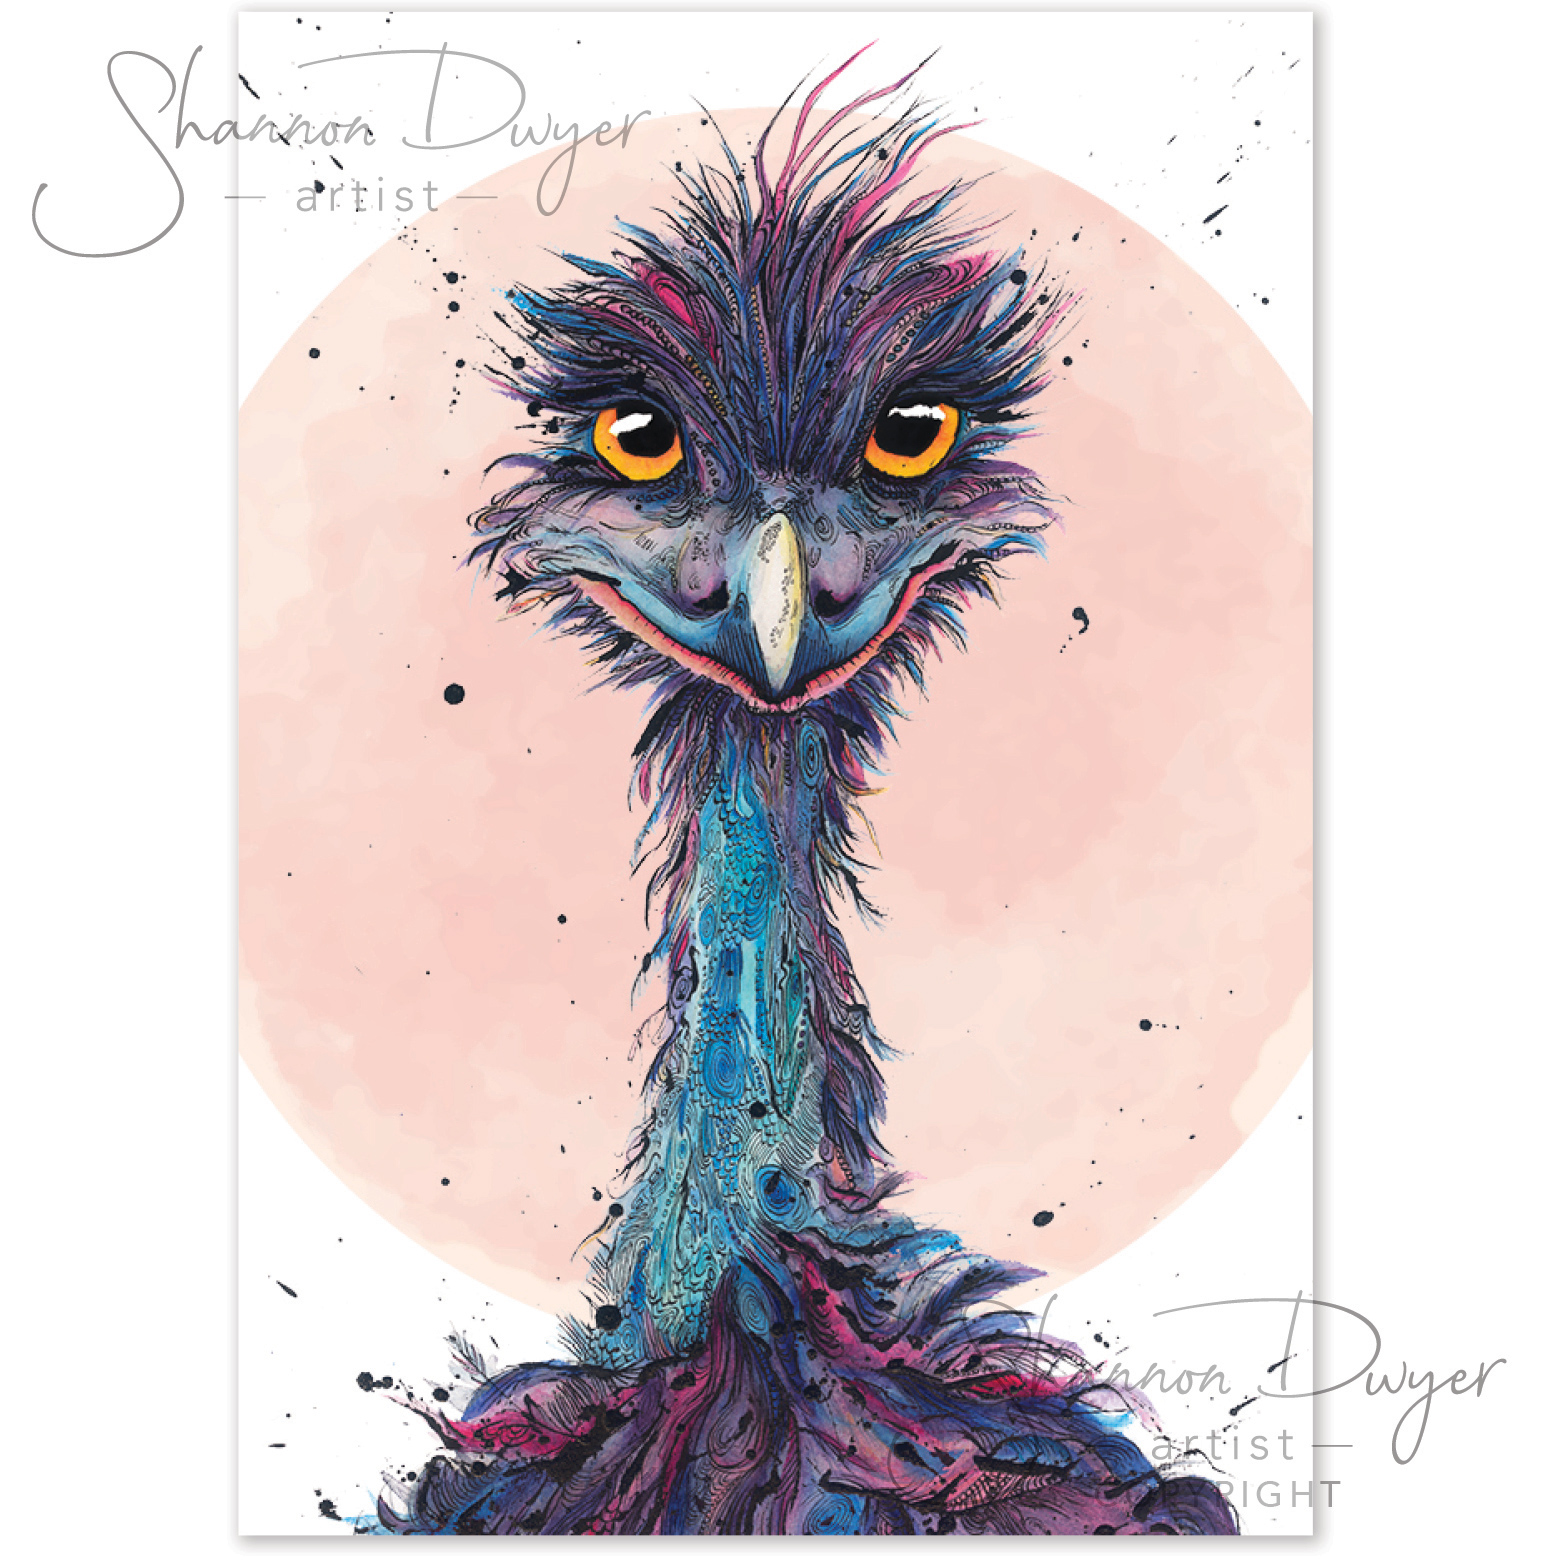 'Edwina' POP Greeting Card artwork of an Emu by Shannon Dwyer Artist